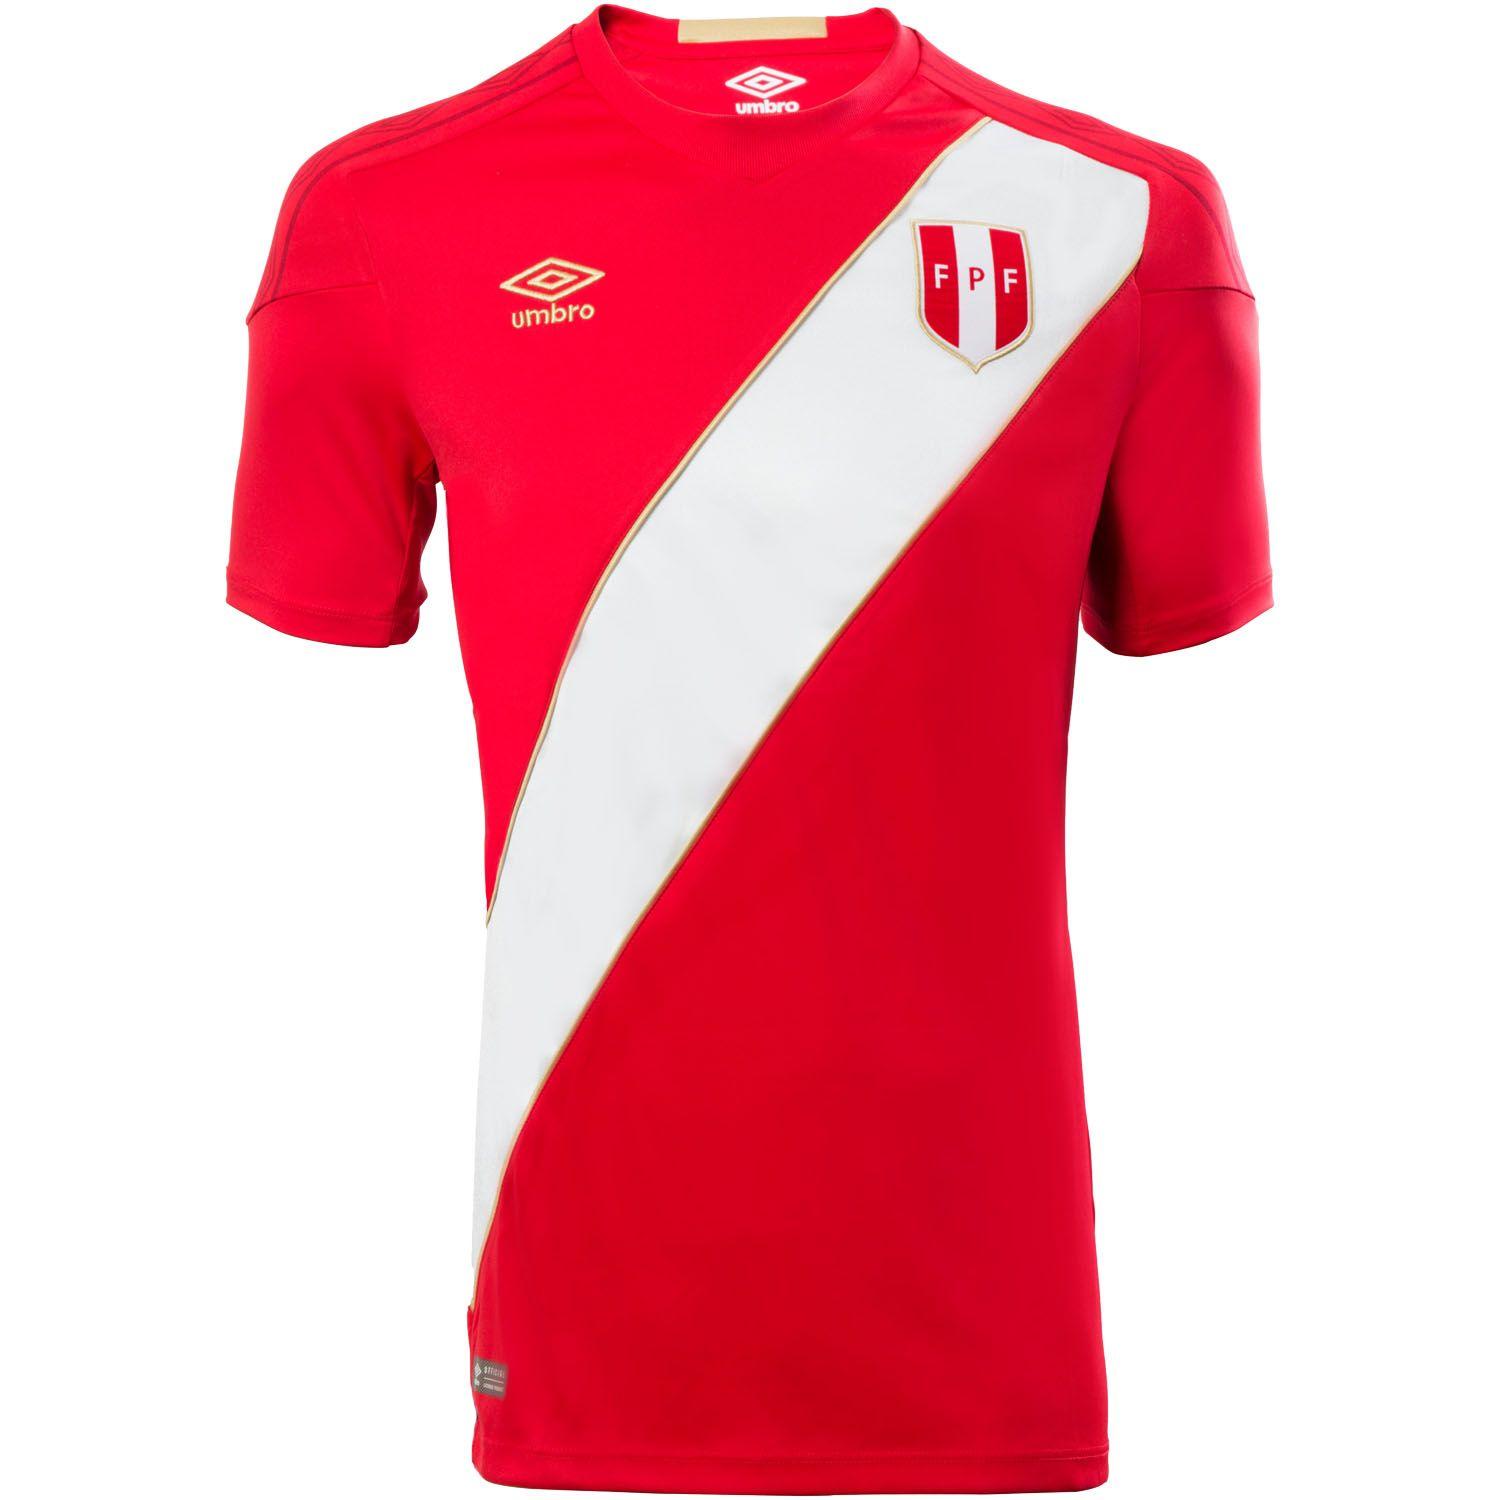 Peru Umbro Logo - Umbro Peru 2018 World Cup Away Replica Jersey | WeGotSoccer